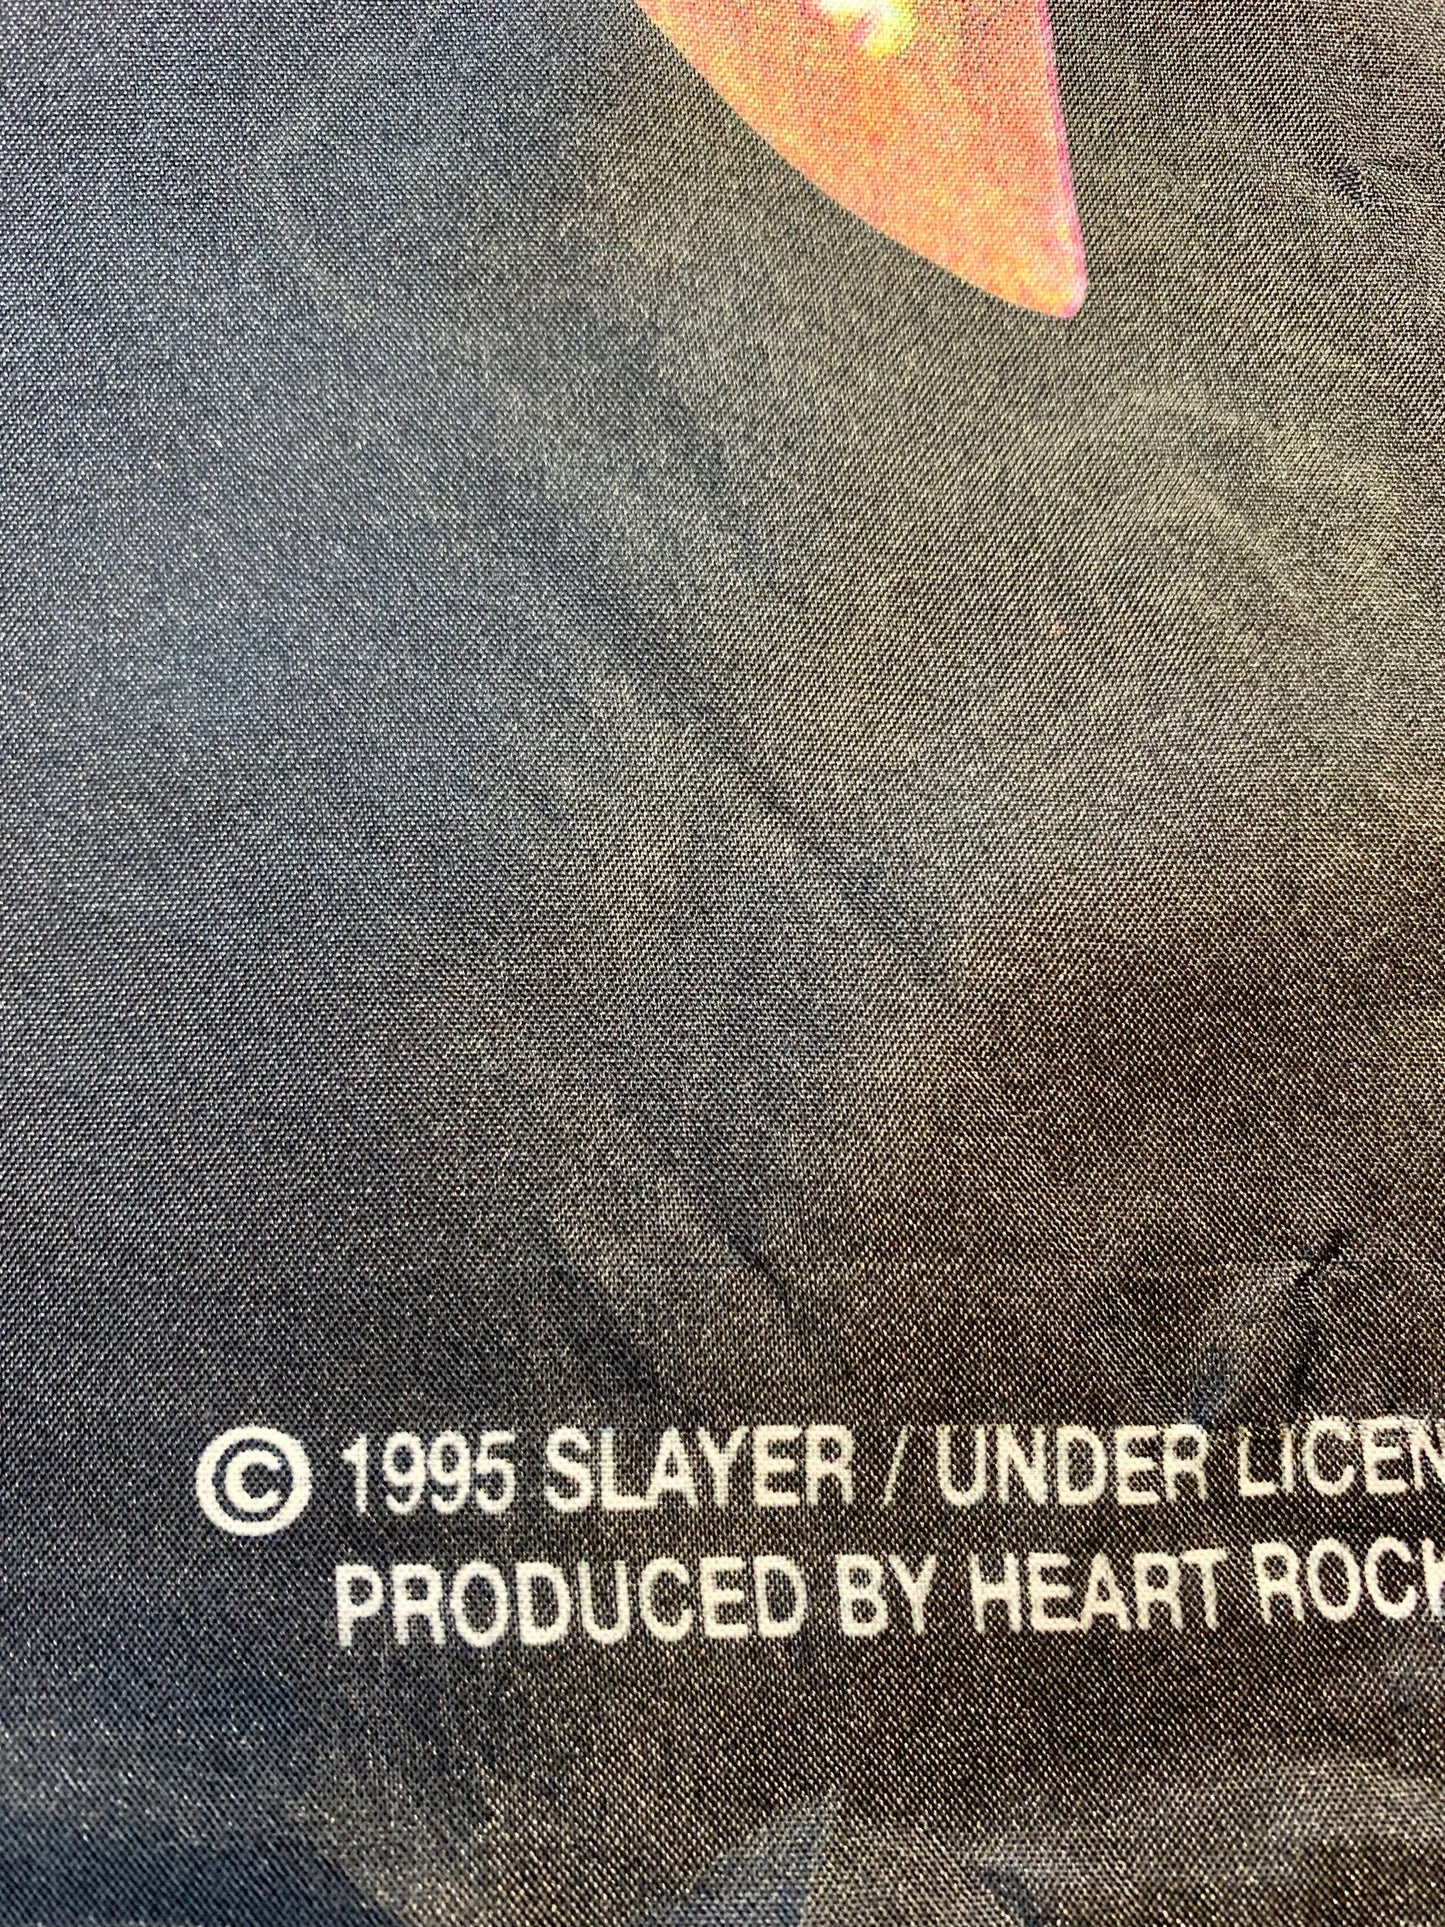 Vintage ‘95 Slayer Wall Banner